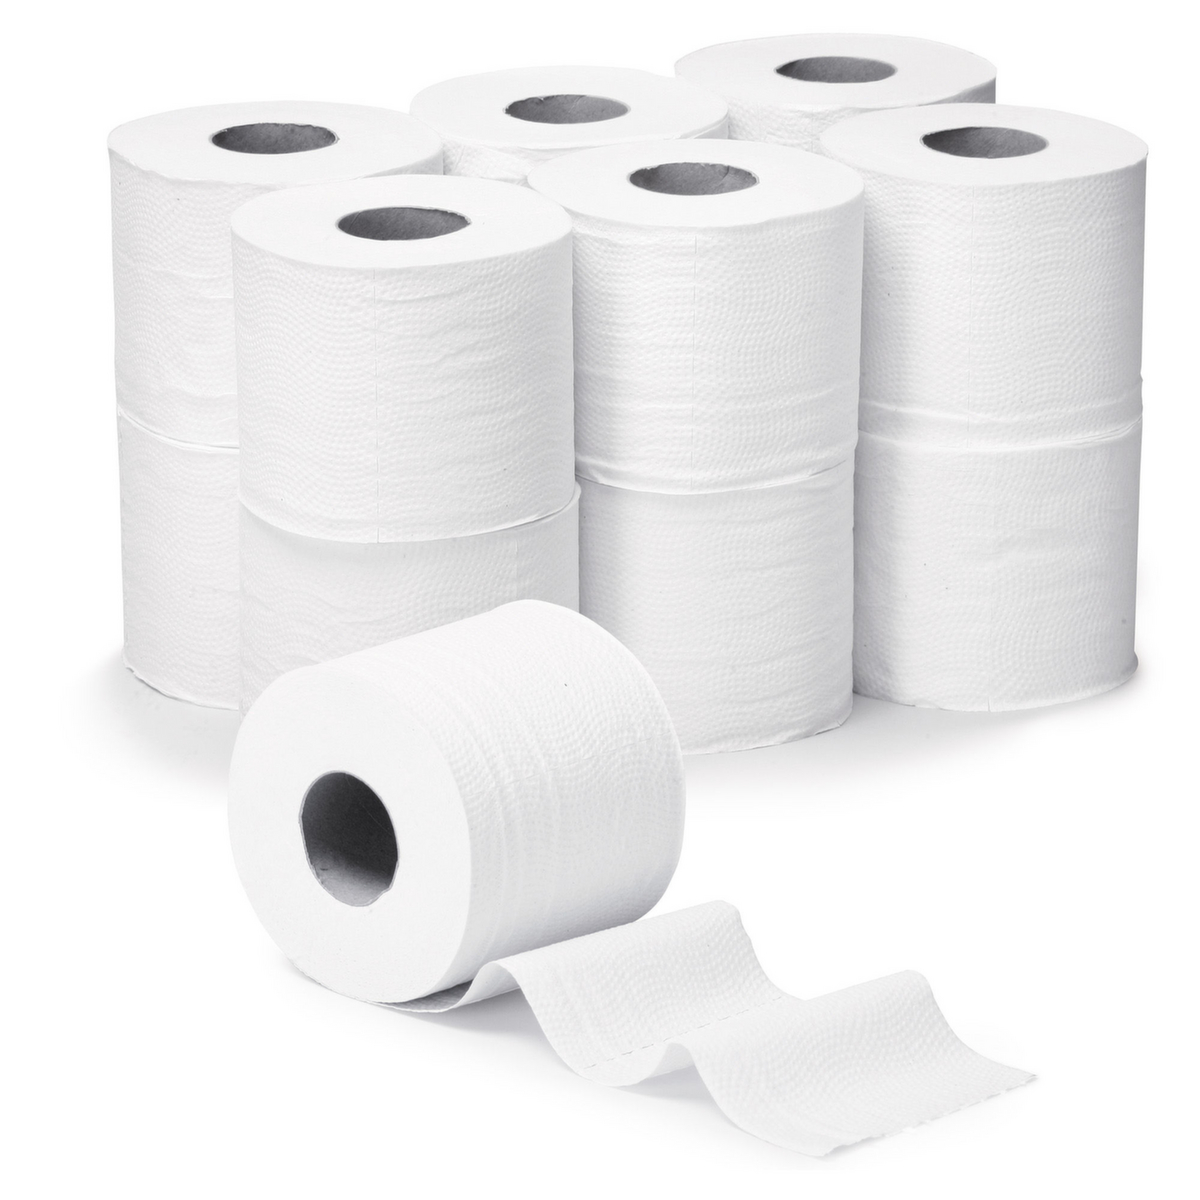 Raja Papier toilette, 2 couches, cellulose recyclée  ZOOM